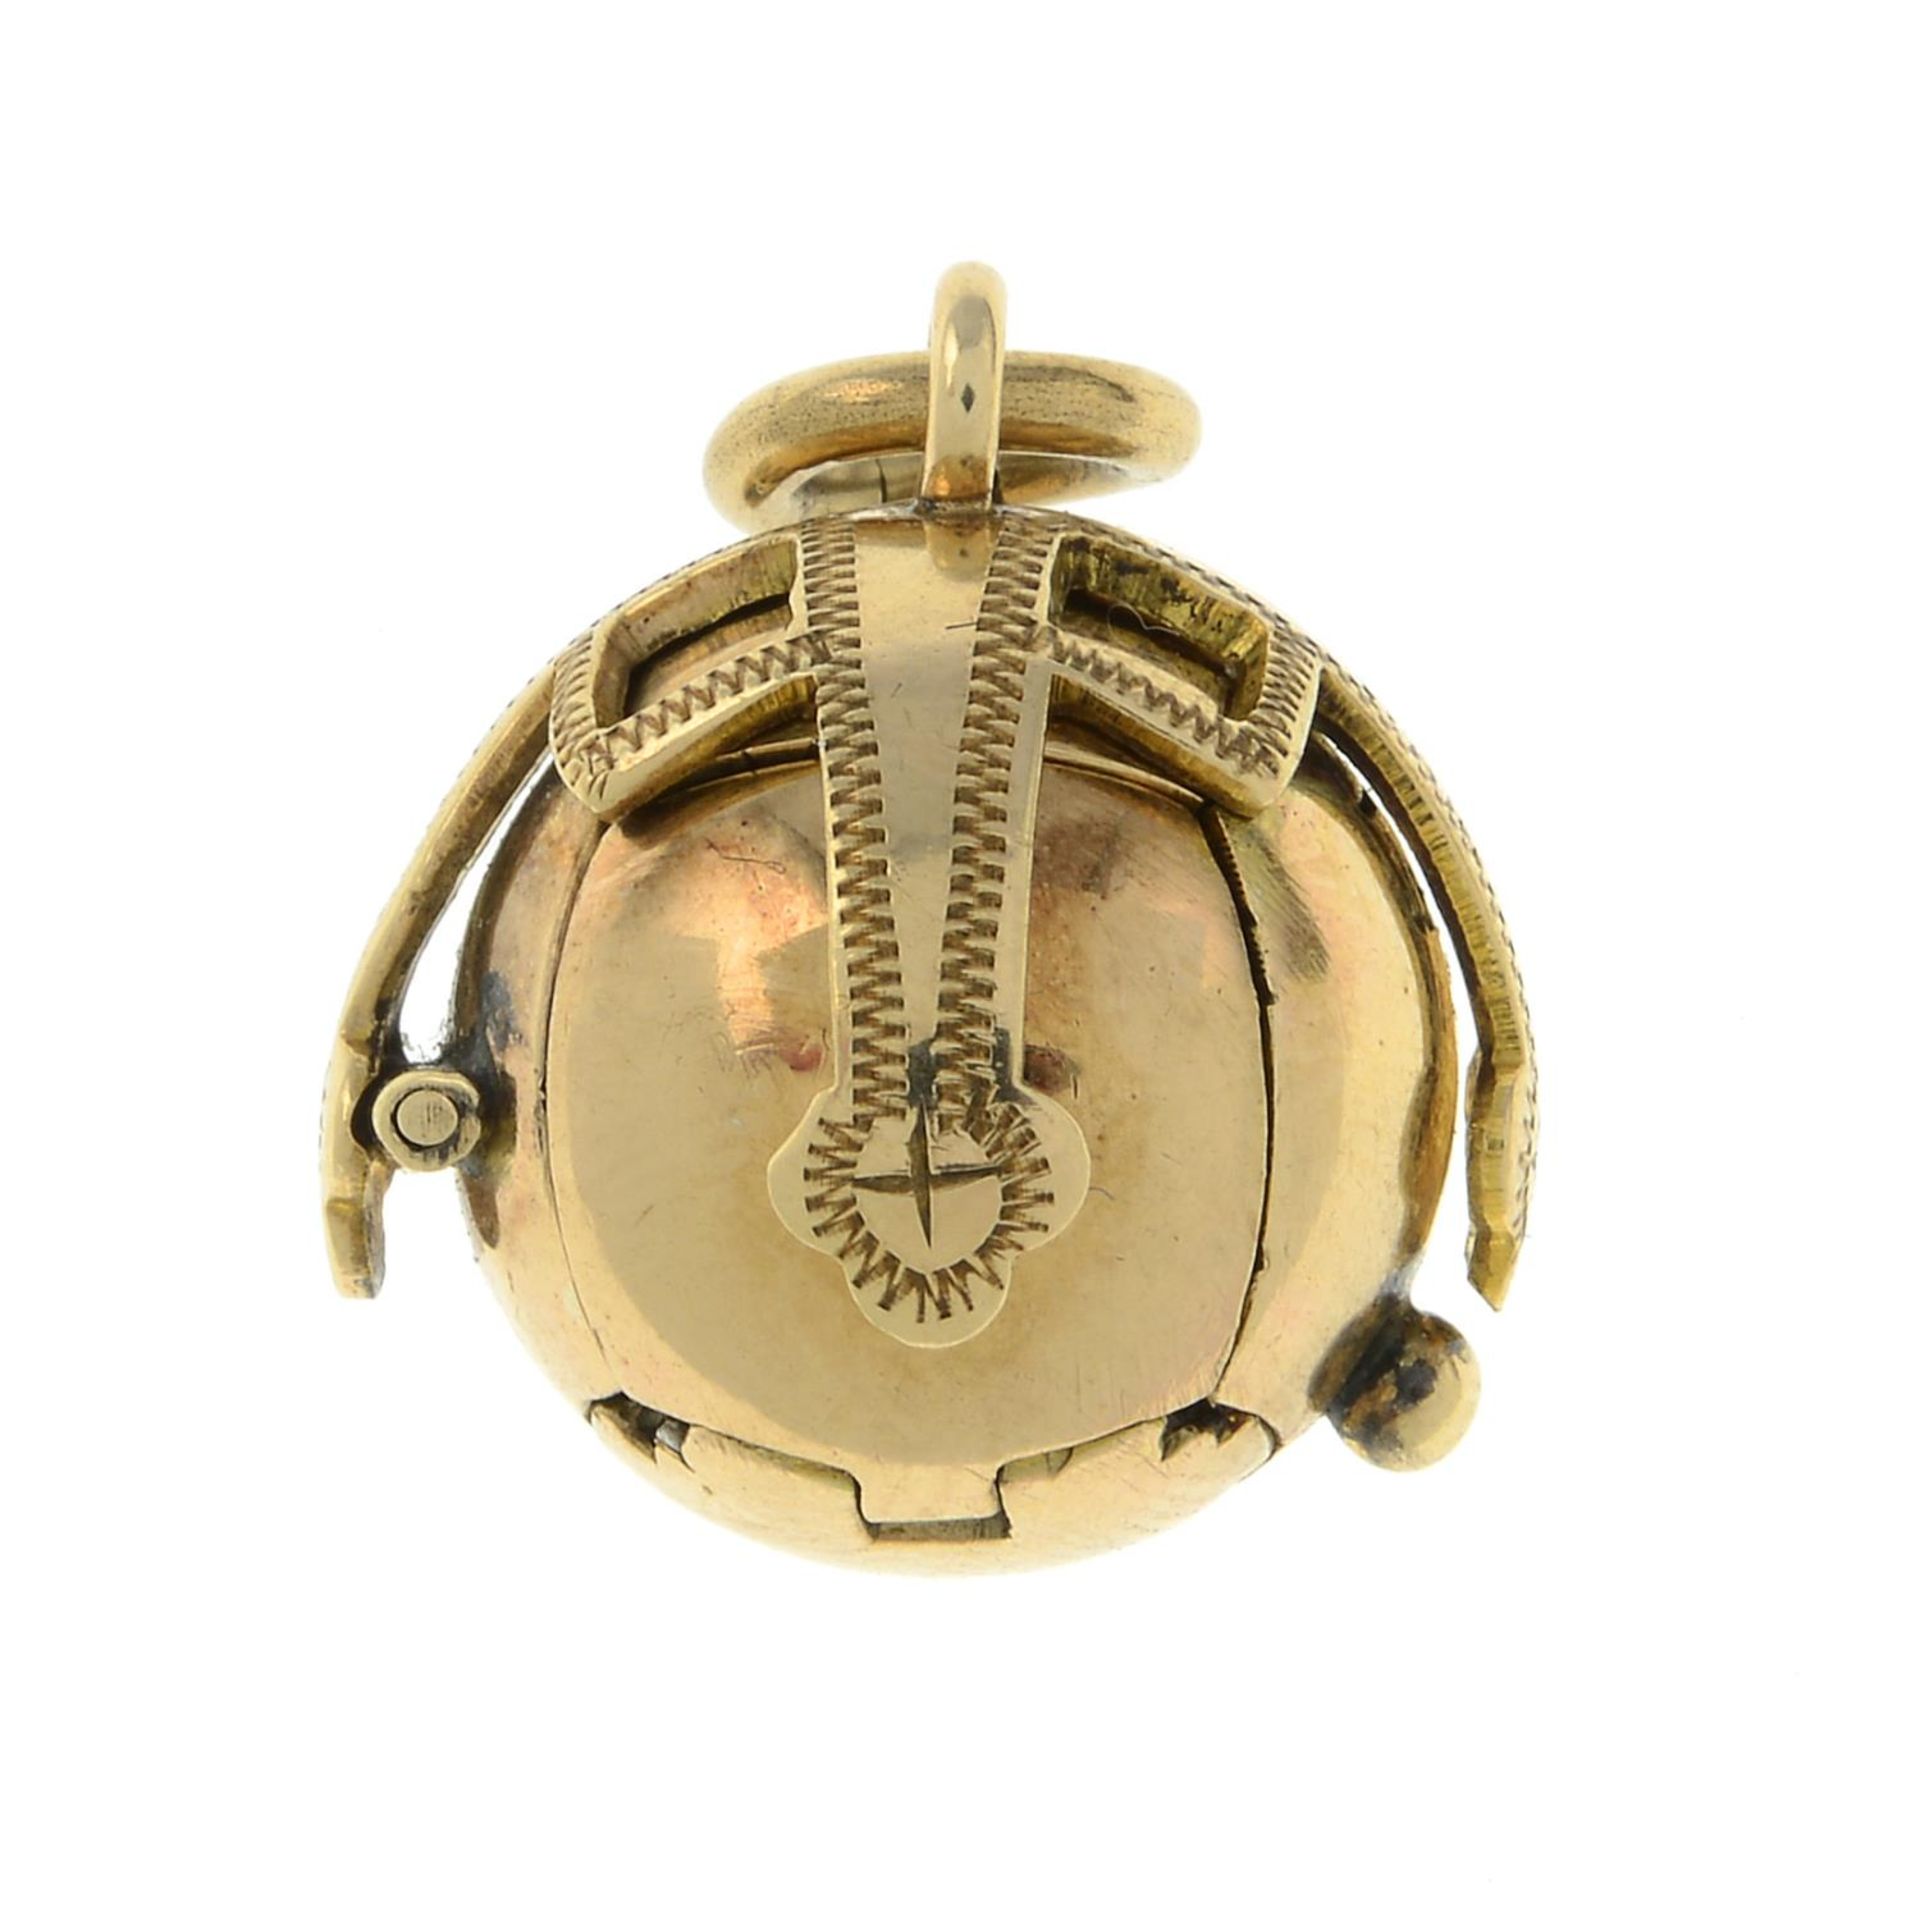 A 9ct gold Masonic ball pendant.Hallmarks for 9ct gold.